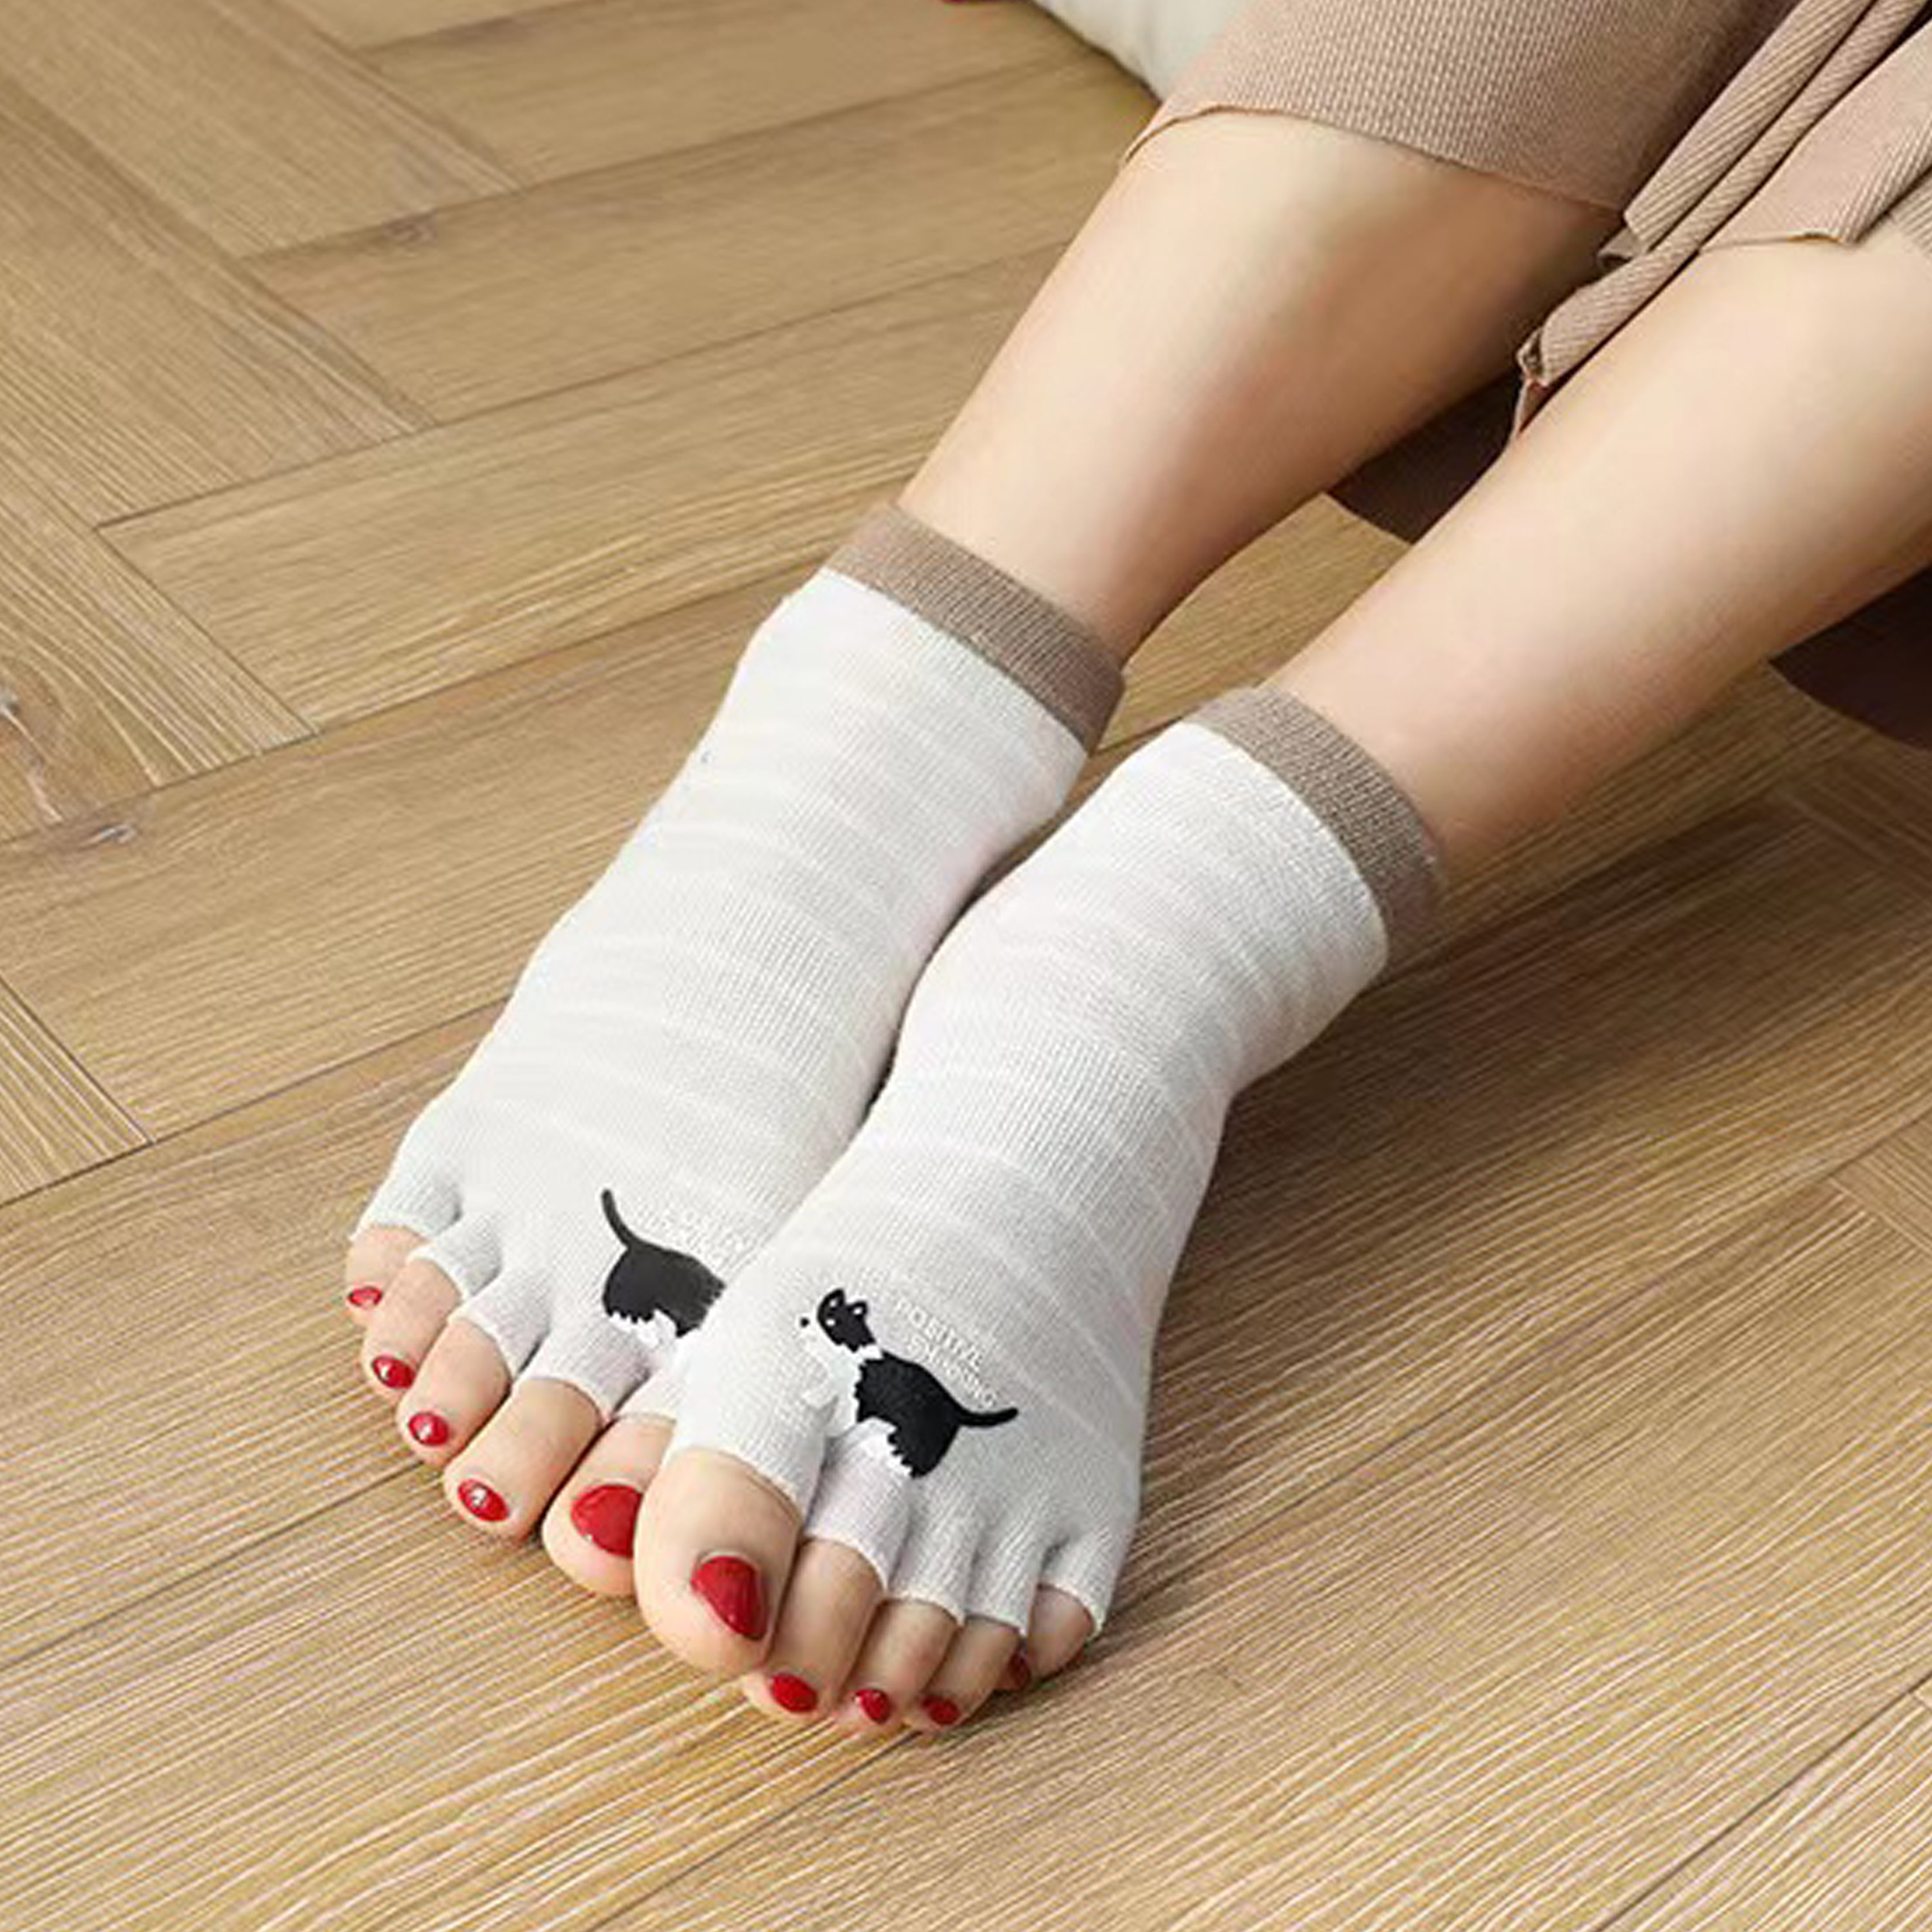 Toe Socks With Grips 